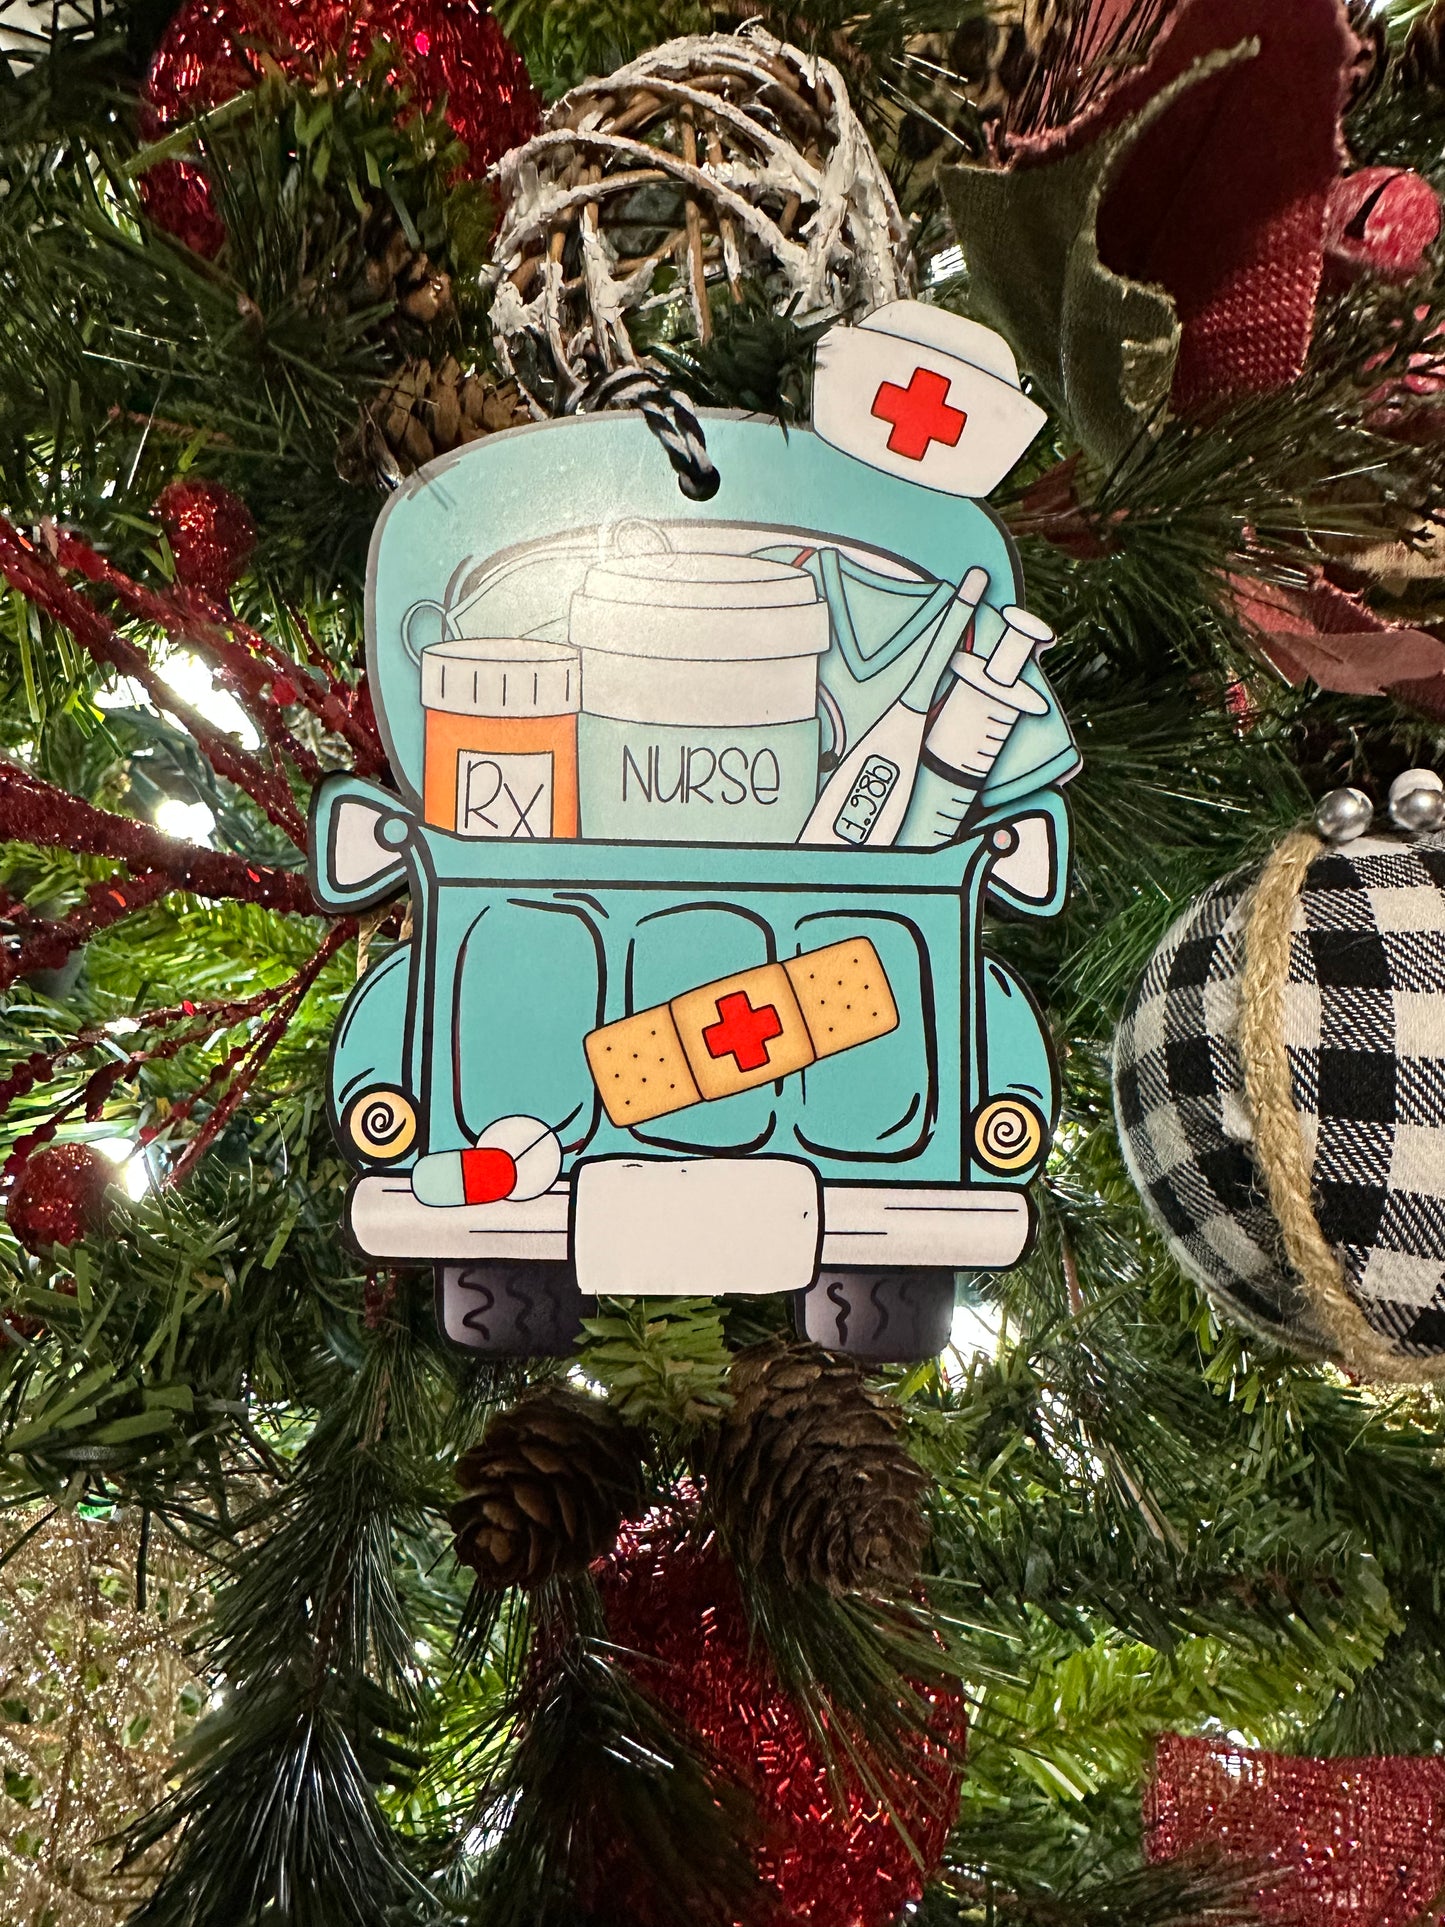 Nurse Truck Ornament